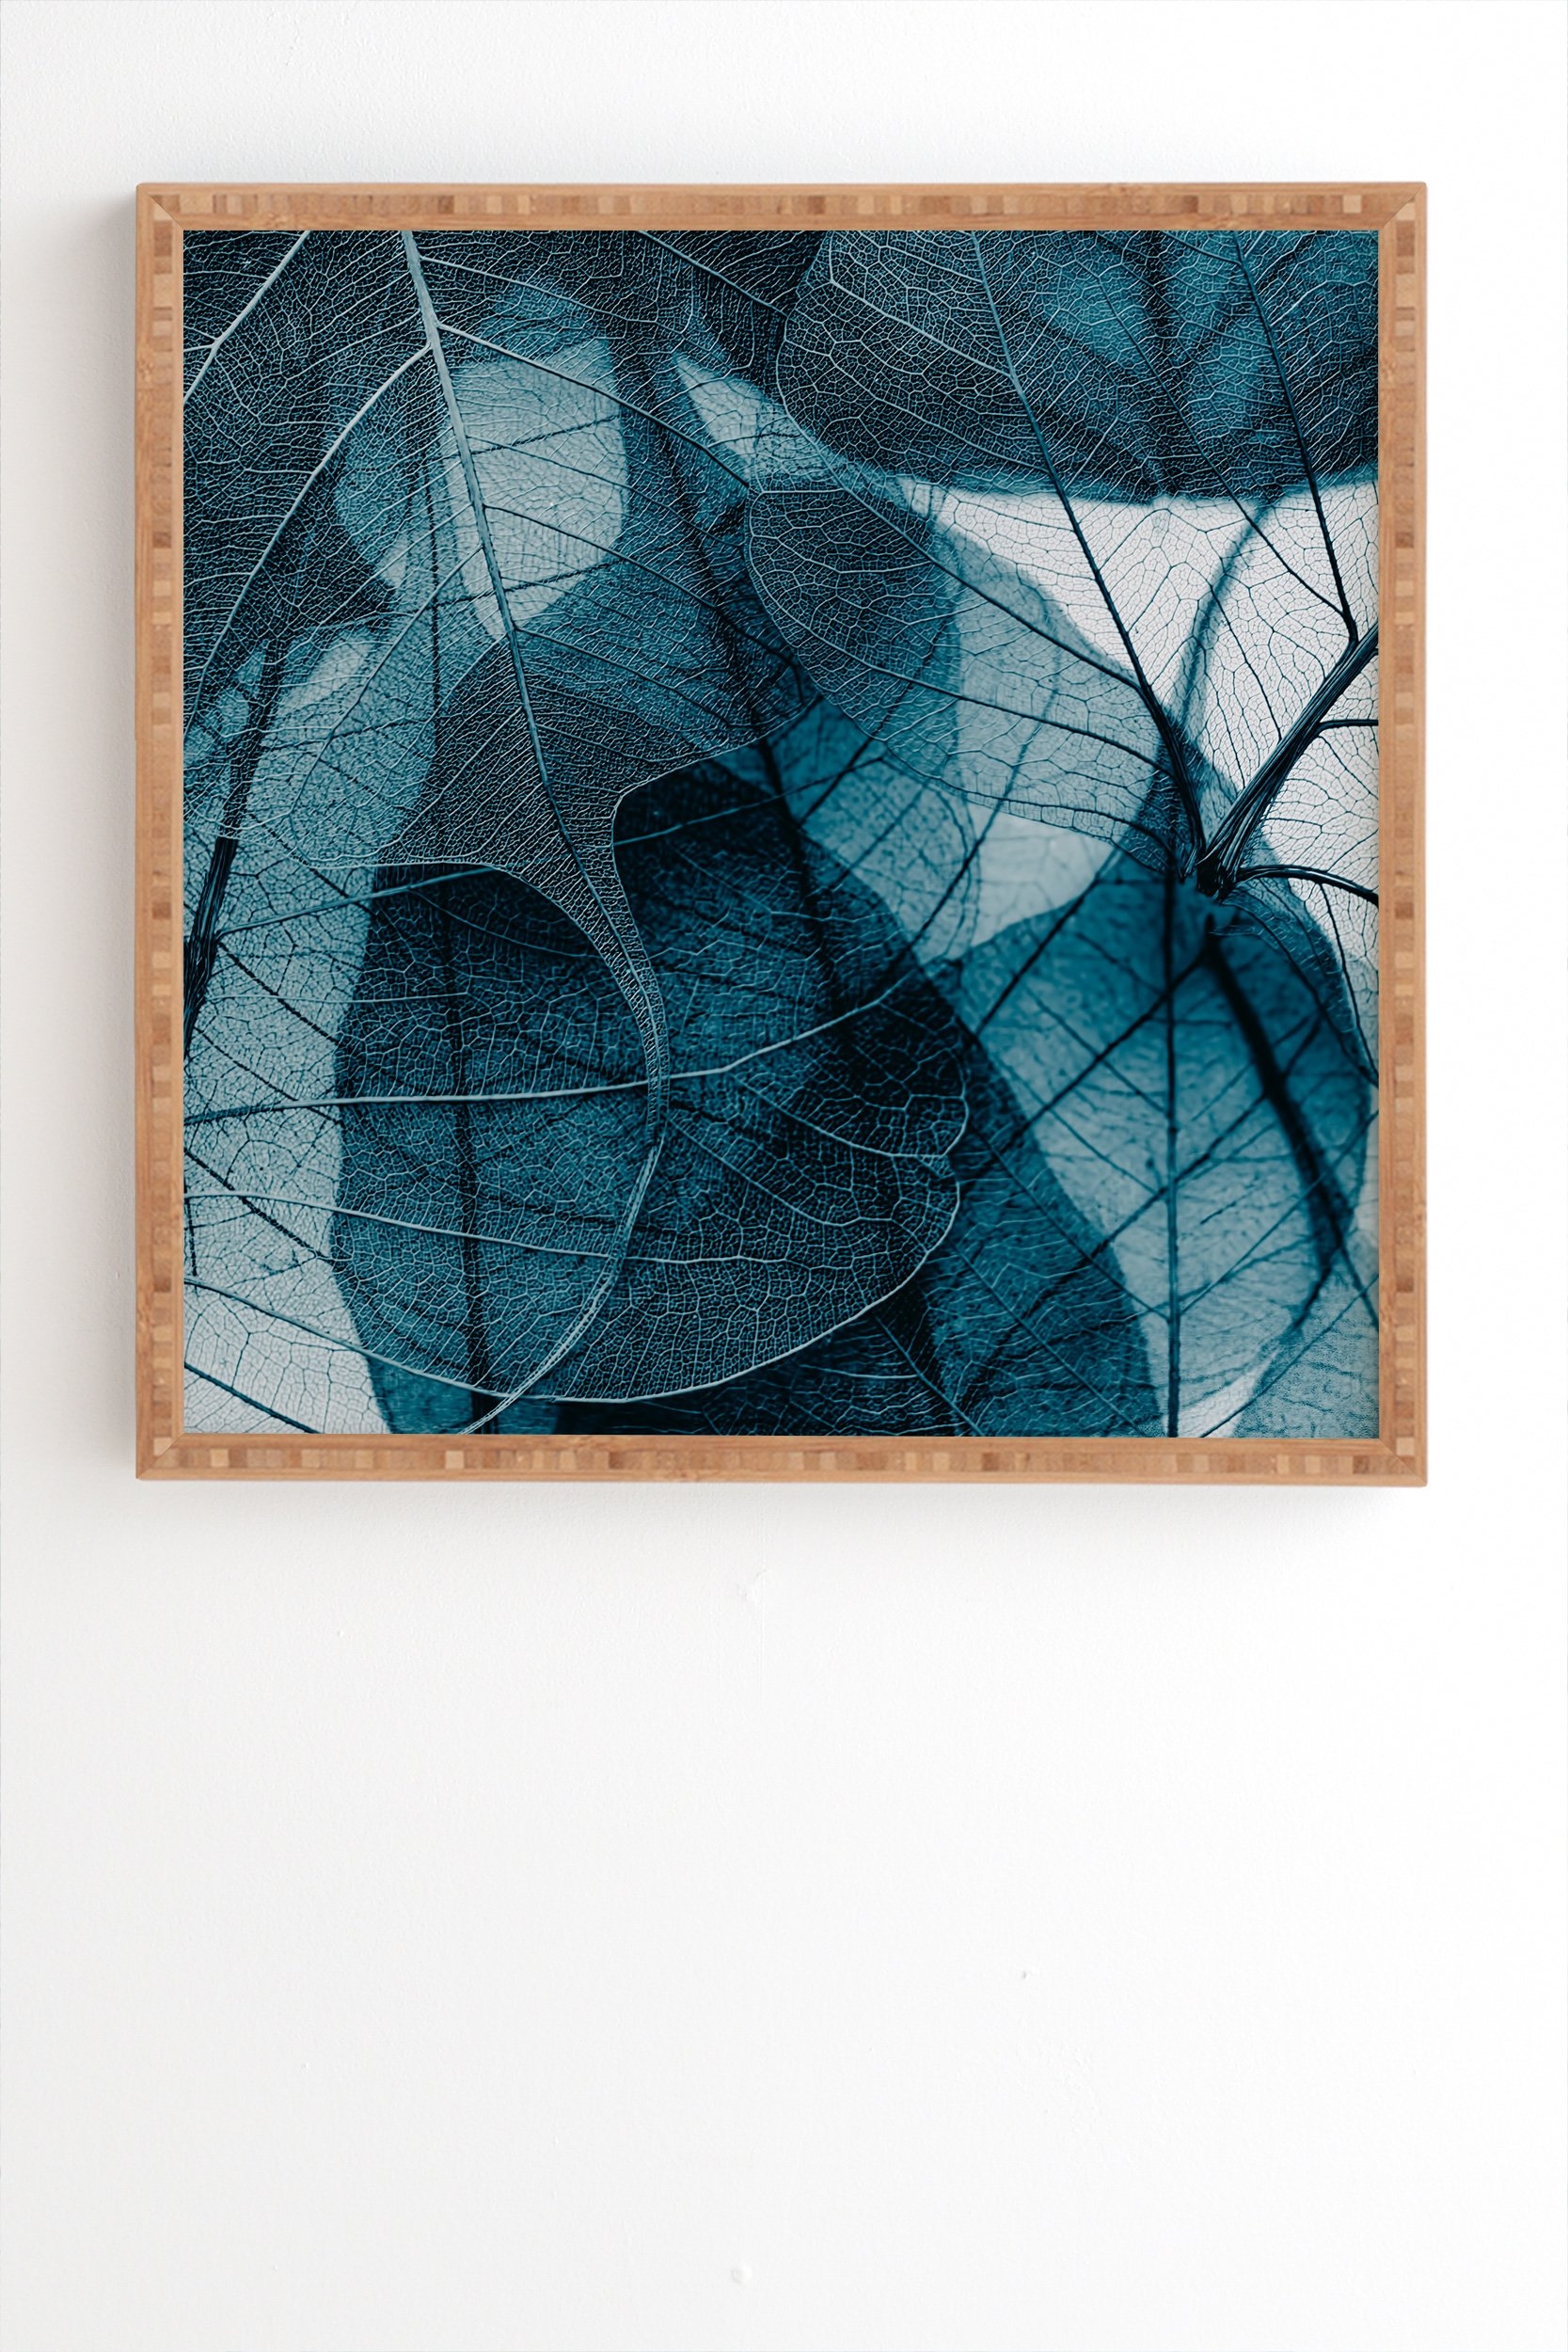 Ingrid Beddoes Denim blue Framed Wall Art - 8" x 9.5" - Image 1